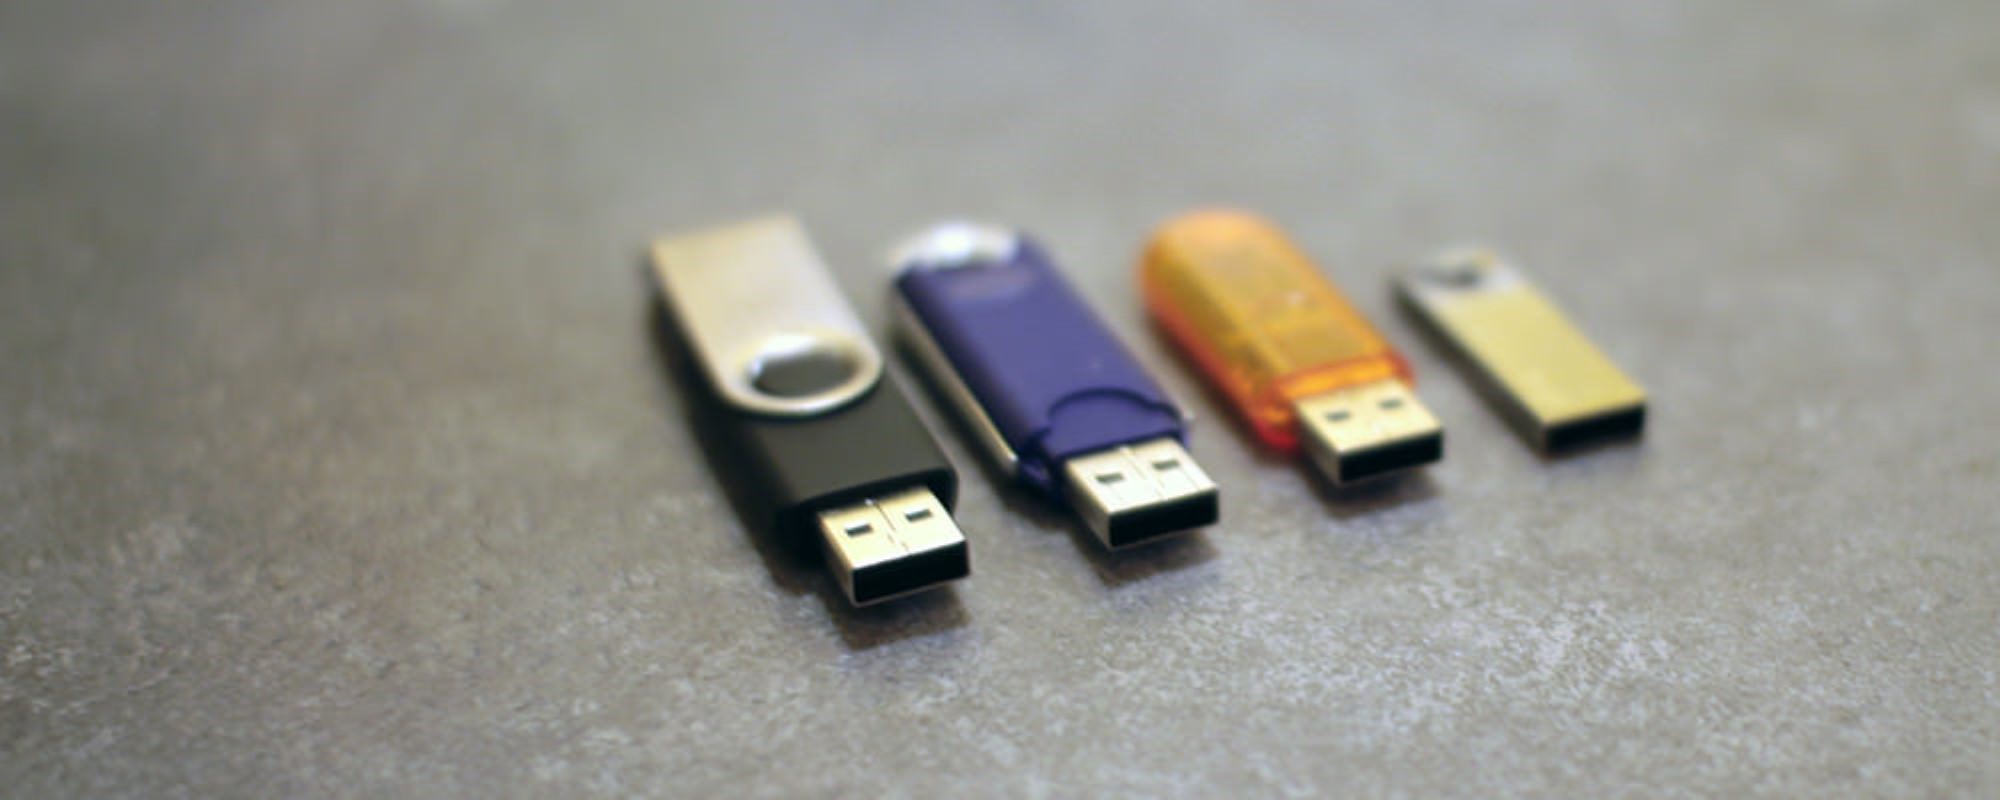 Optimaler Live-USB-Stick